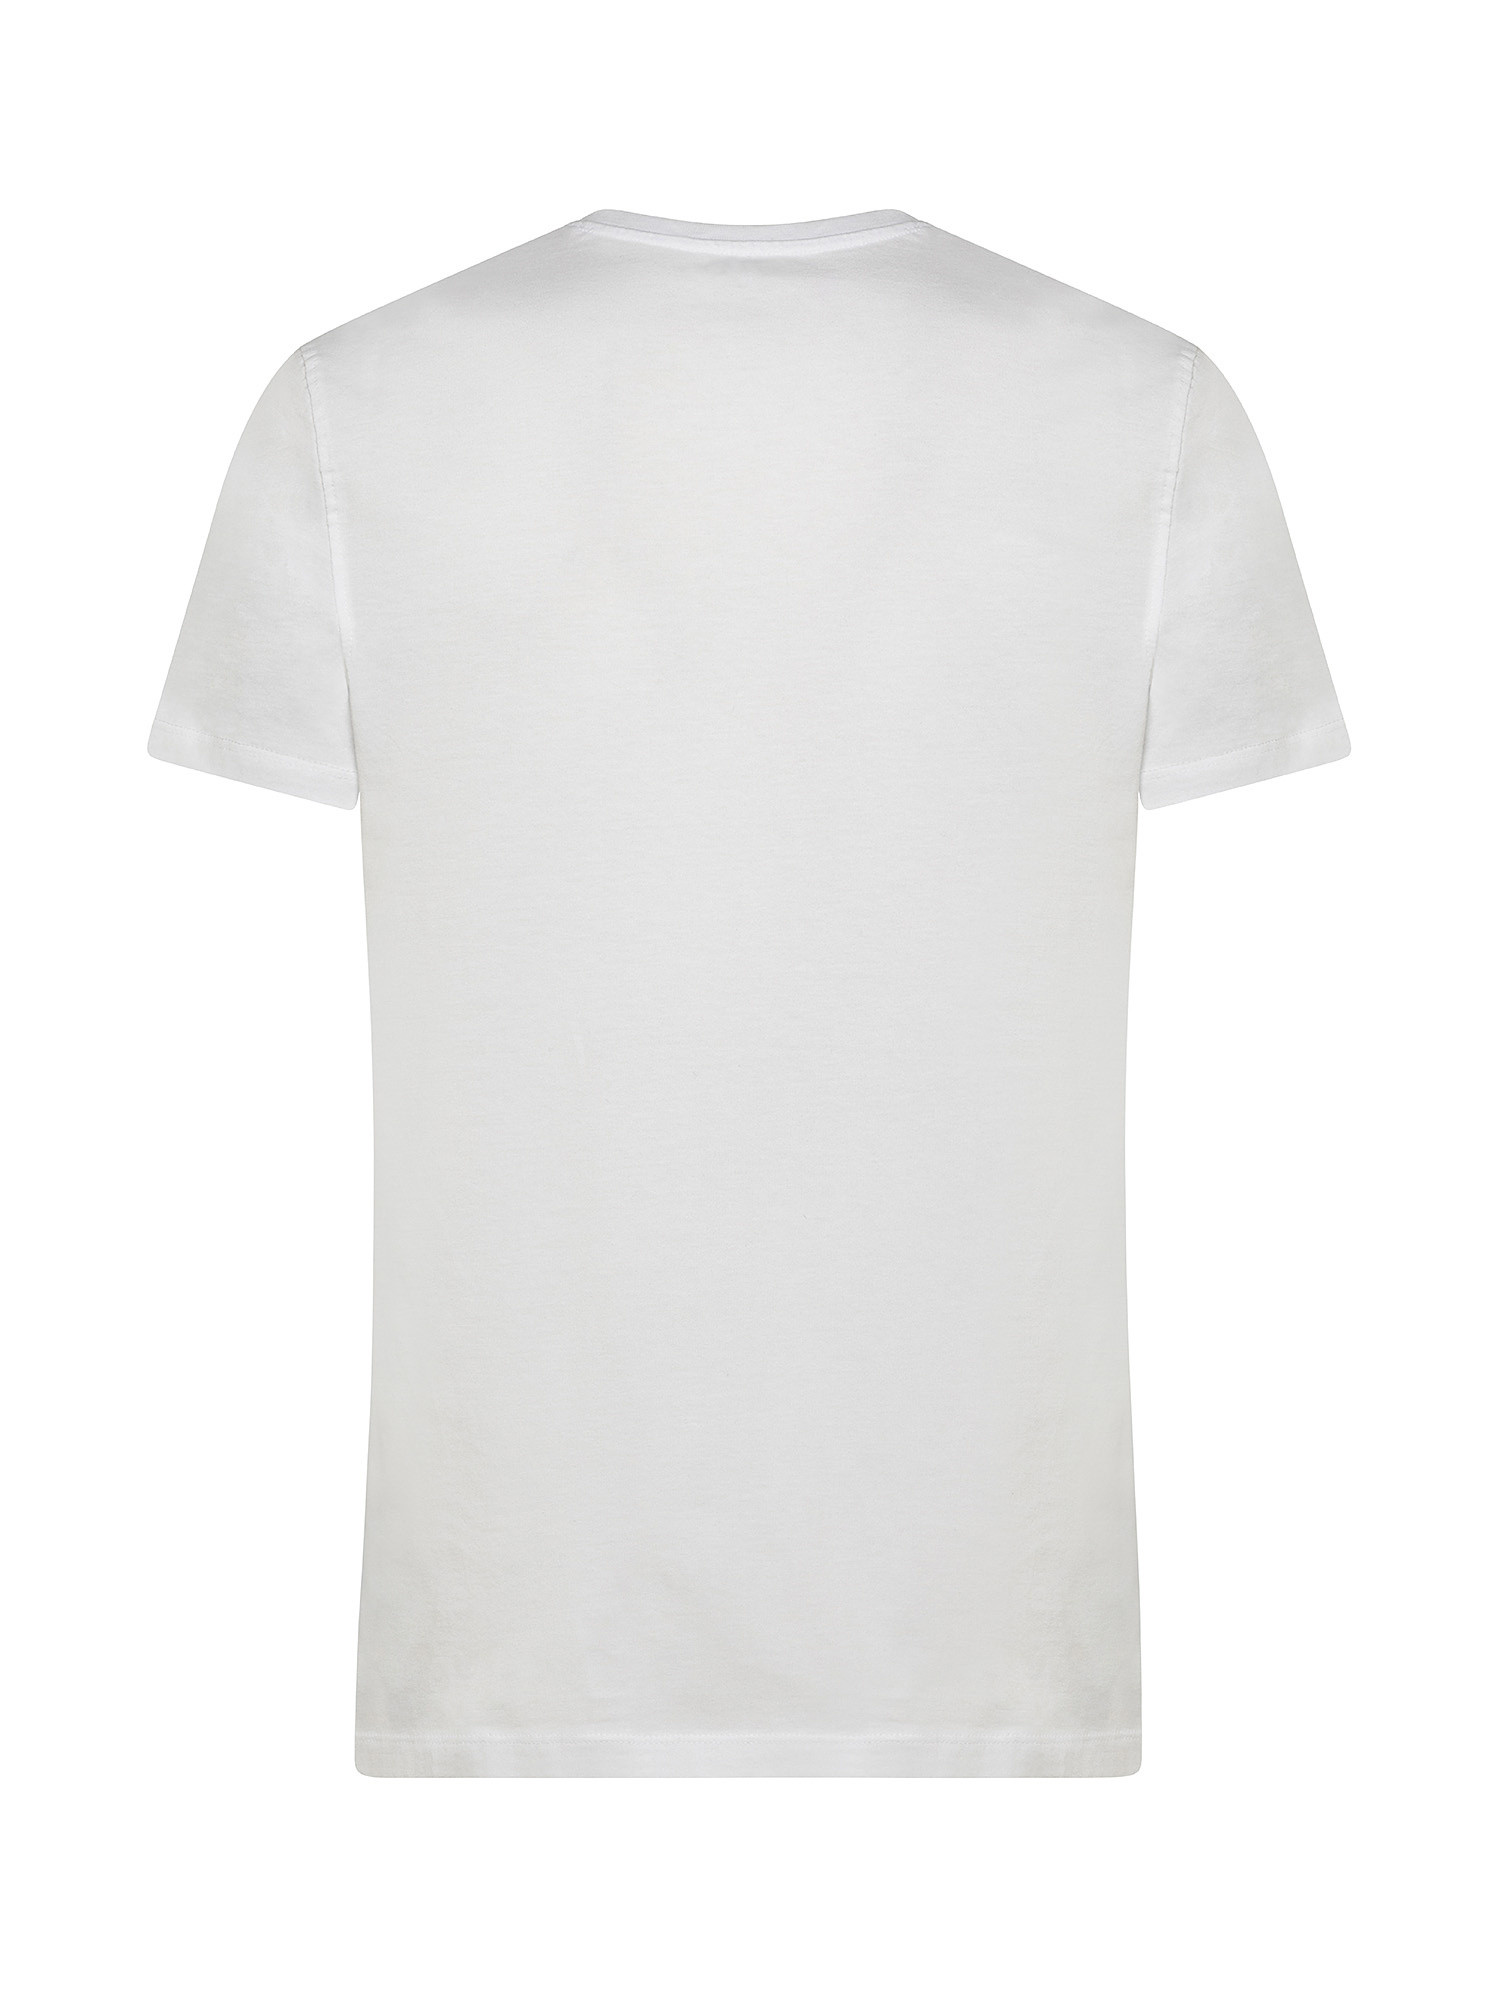 Luca D'Altieri - T-shirt scollo a V cotone supima, Bianco, large